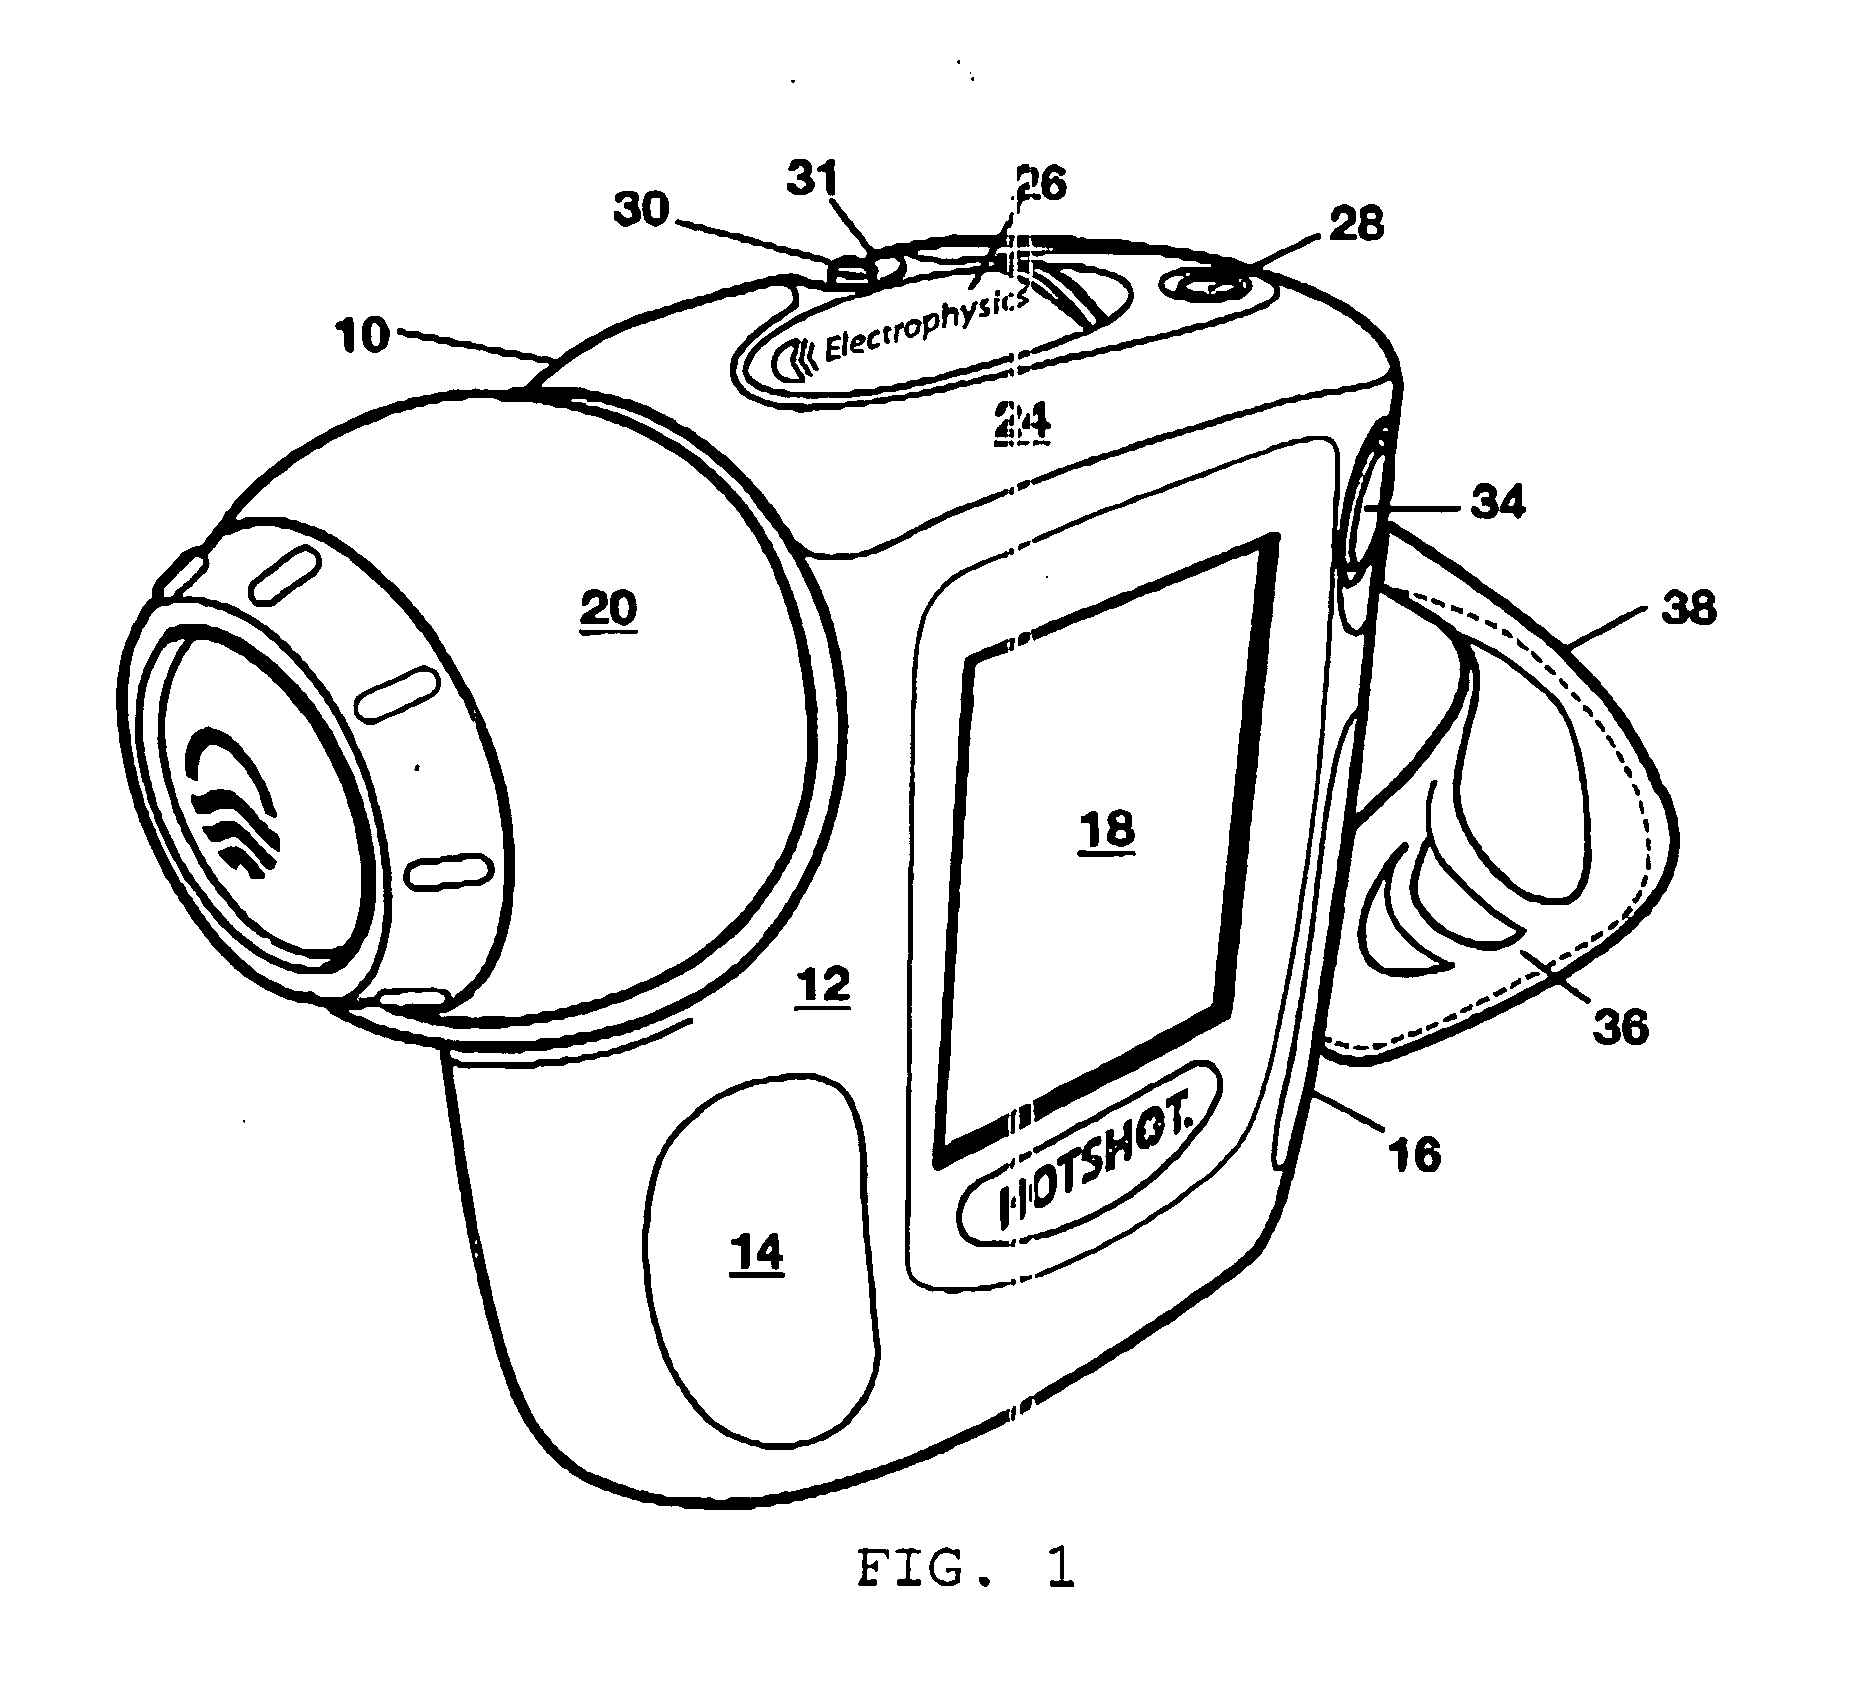 Portable infrared camera